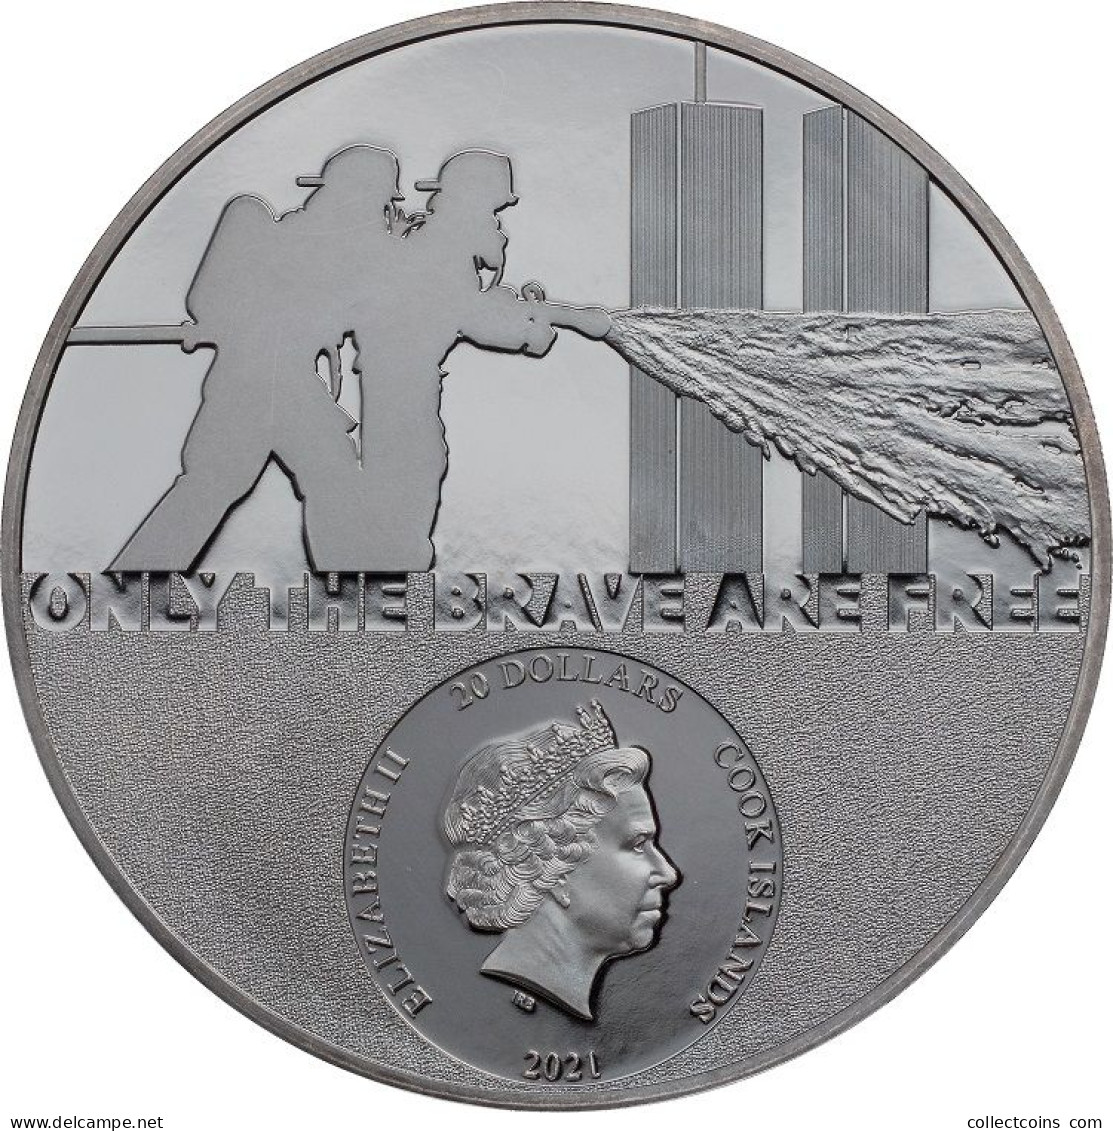 Cook Islands 20 dollars 2021 FIREFIGHTER 3 oz silver proof coin zilveren munt